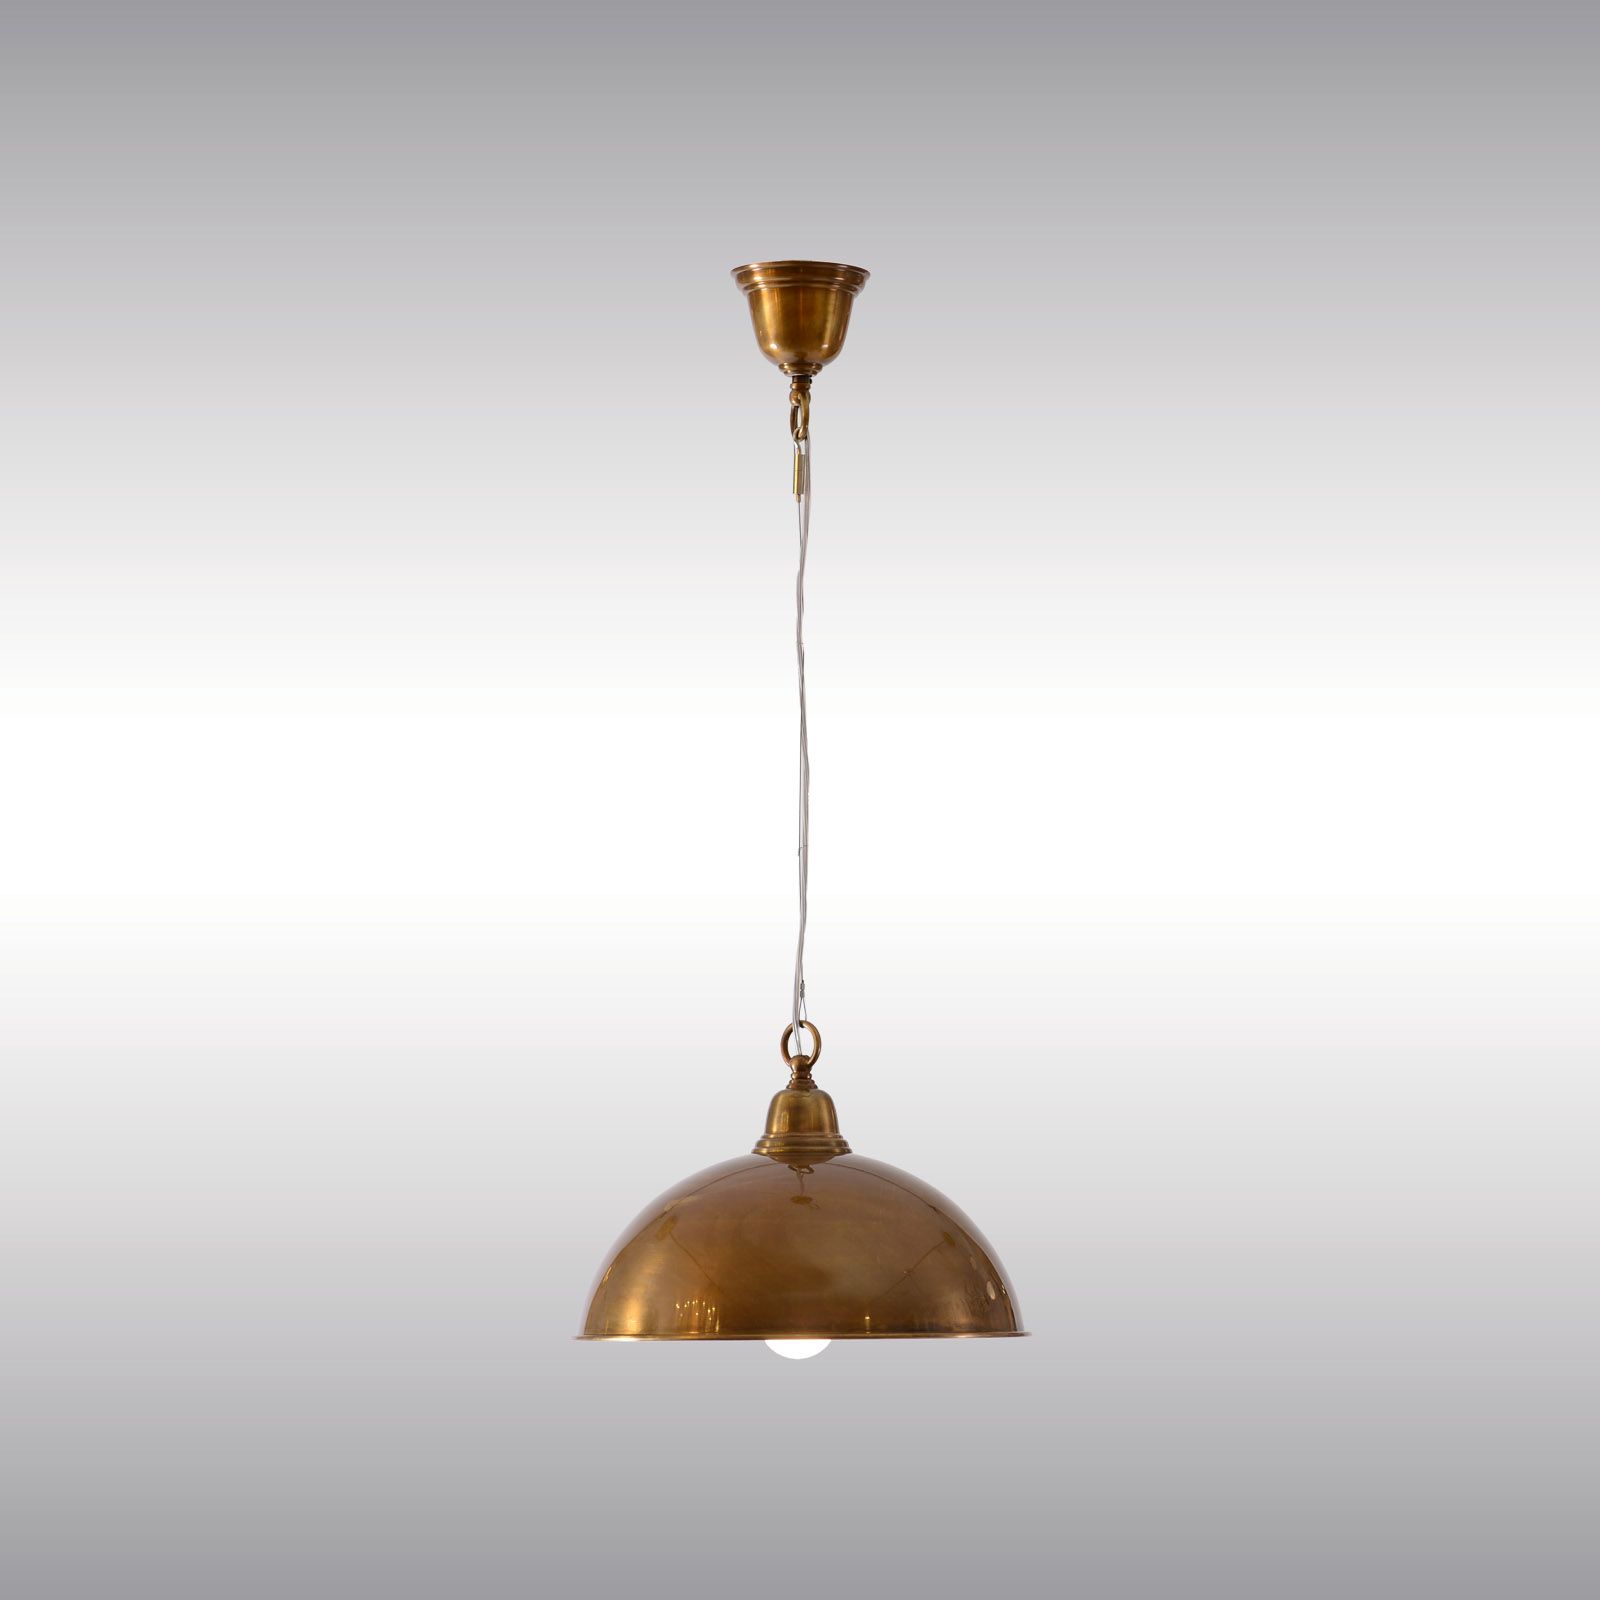 WOKA LAMPS VIENNA - OrderNr.: 21524|Looshaus Comptoir Pendenlampe 35 - Design: Adolf Loos